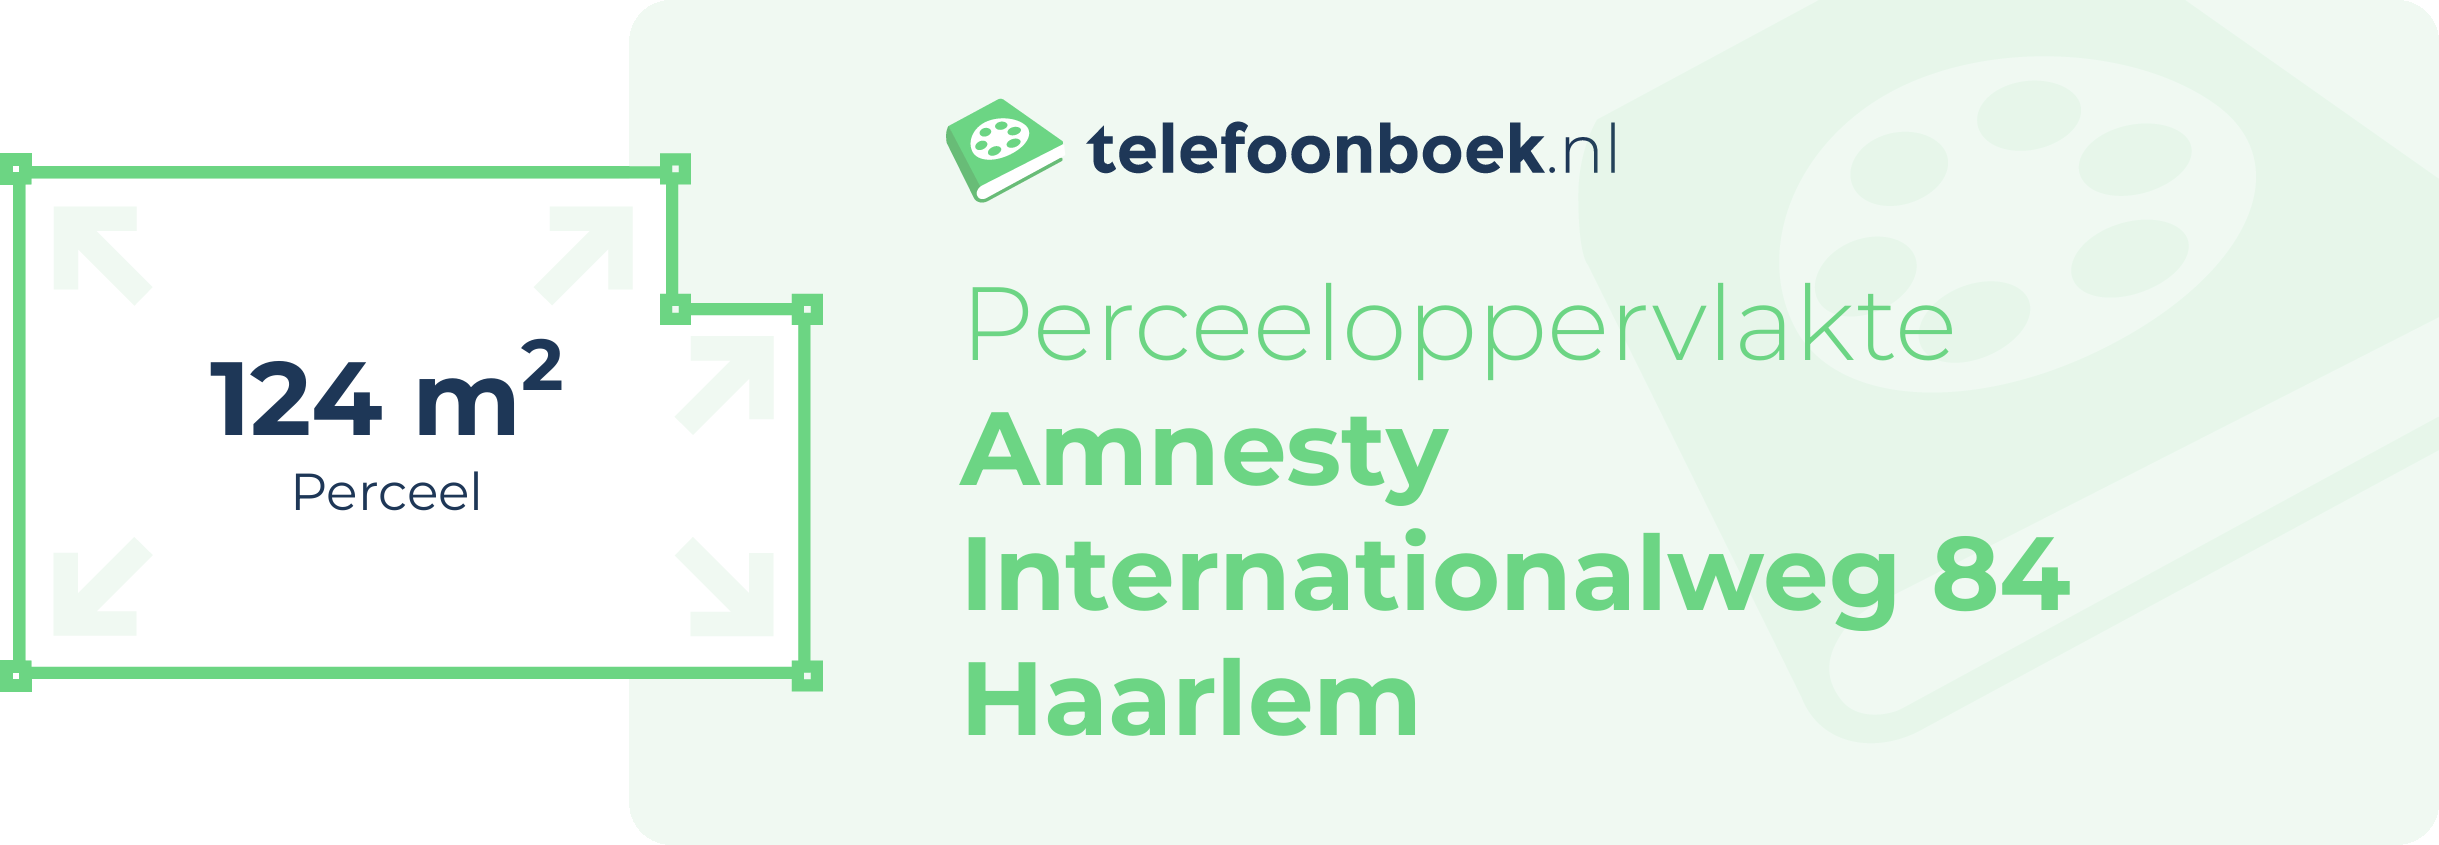 Perceeloppervlakte Amnesty Internationalweg 84 Haarlem